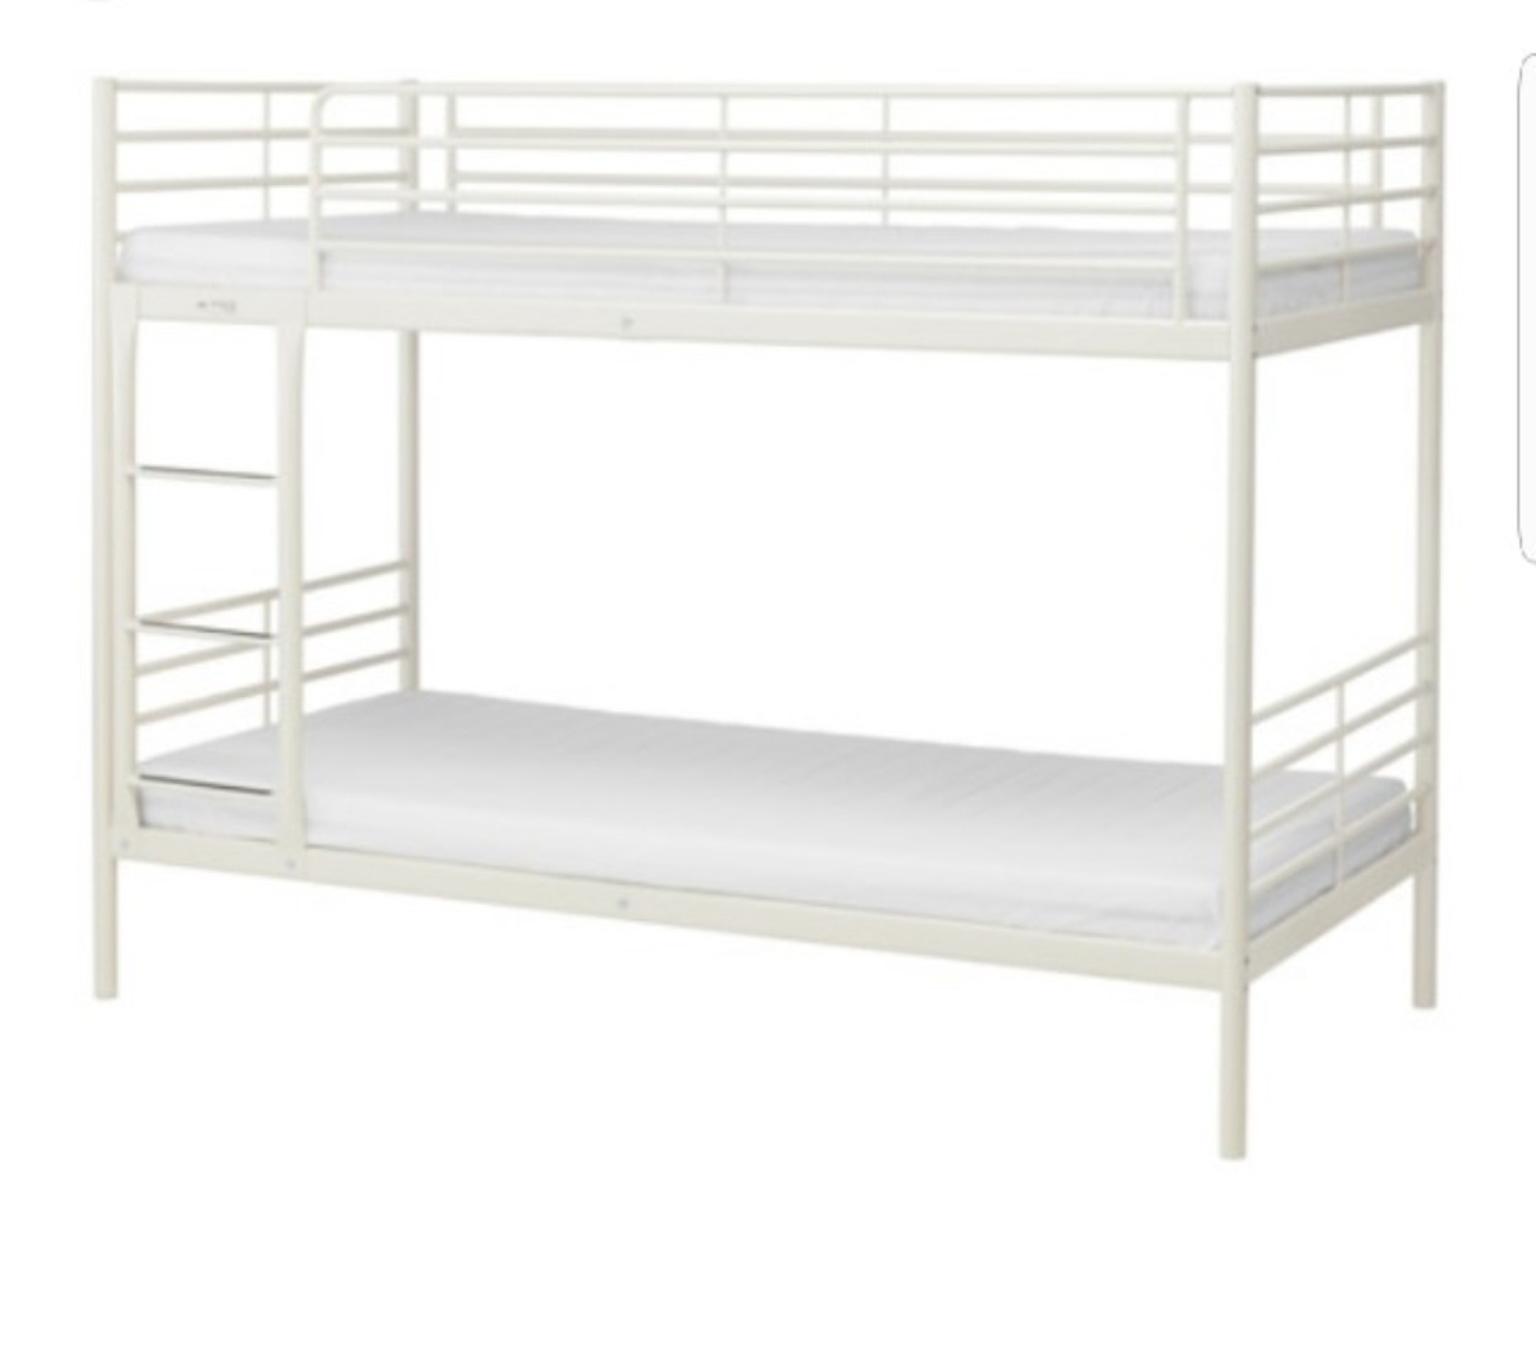 Ikea Svarta Bunk Bed White In E7 London, Svarta Bunk Bed Manual